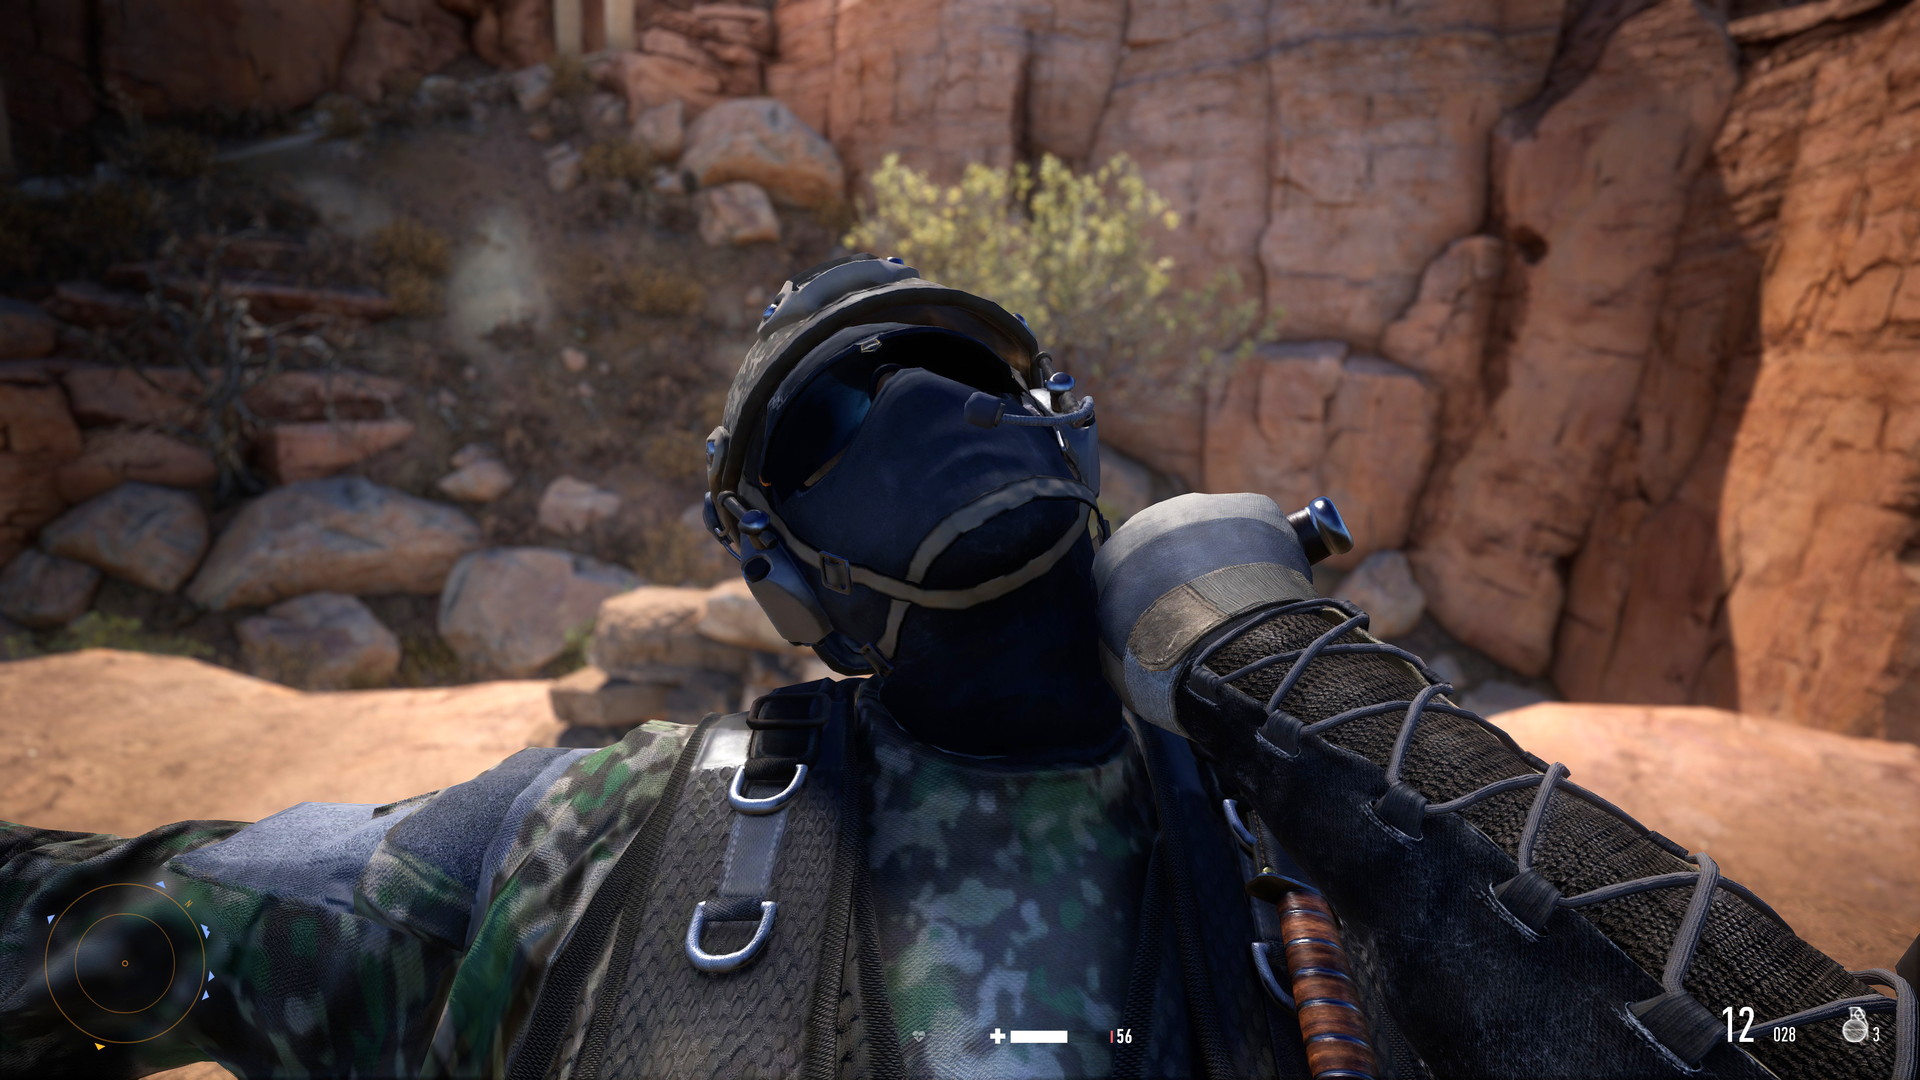 sniper ghost warrior contracts 2 update